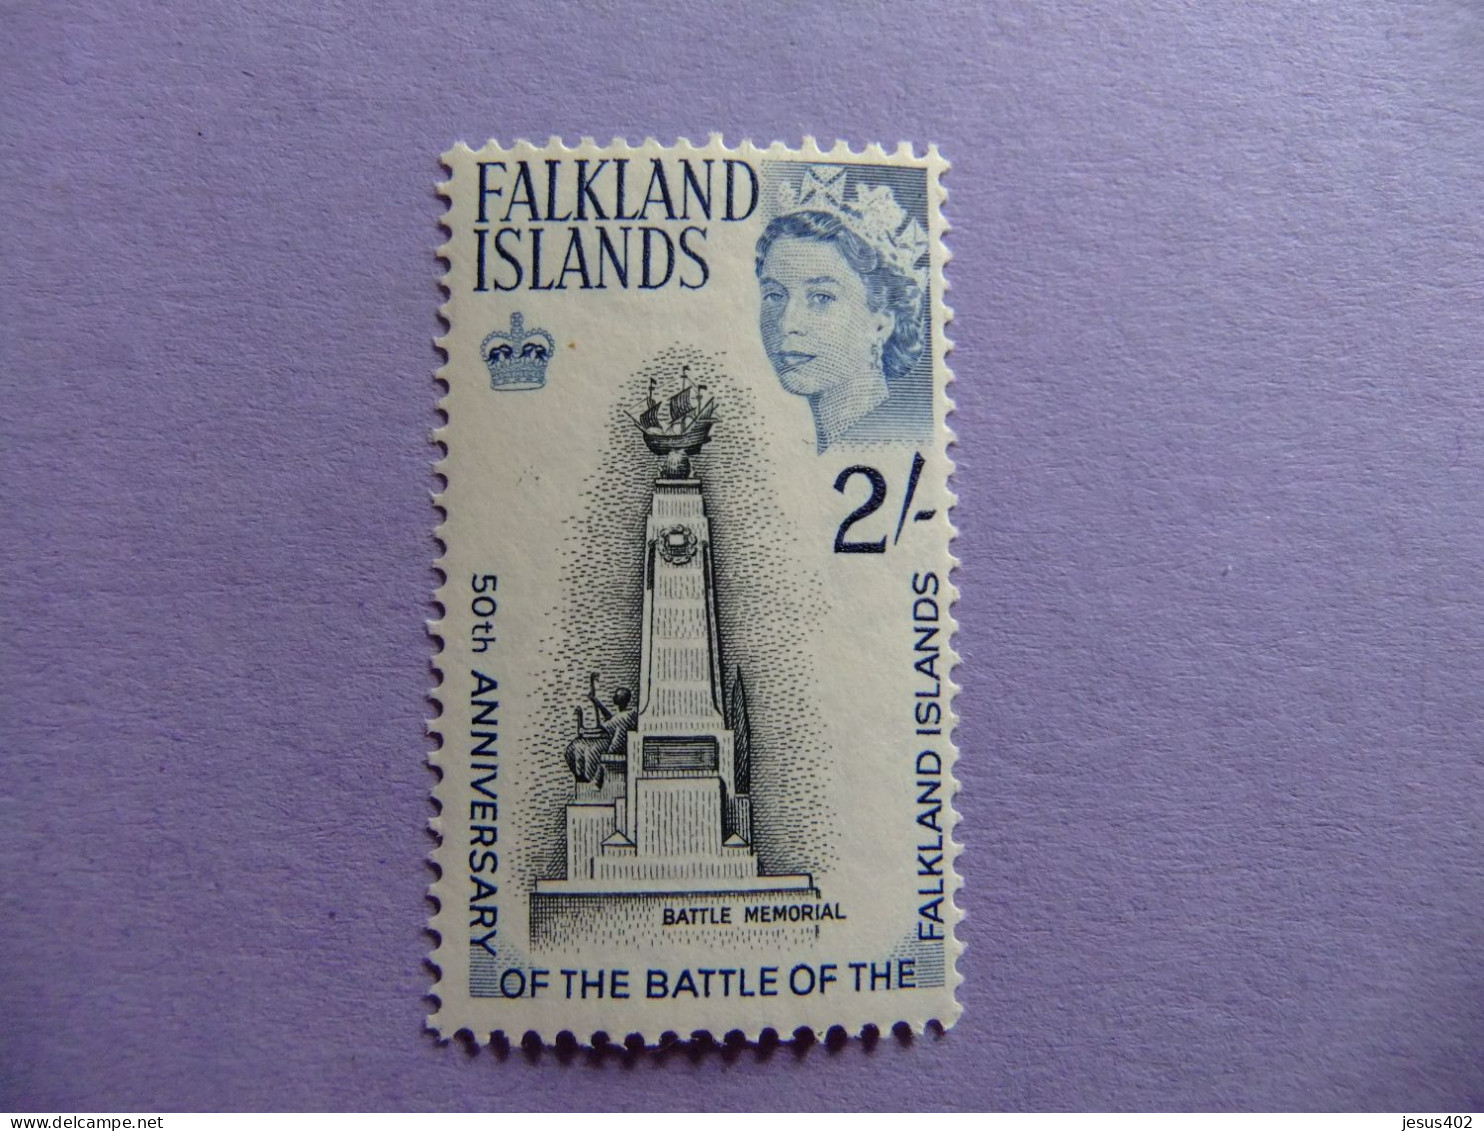 MALVINAS FALKLAND ISLANDS 1964 MEMORIAL DE LA BATALLA E FALKLAND YVERT 147 MNH - Maldive (...-1965)